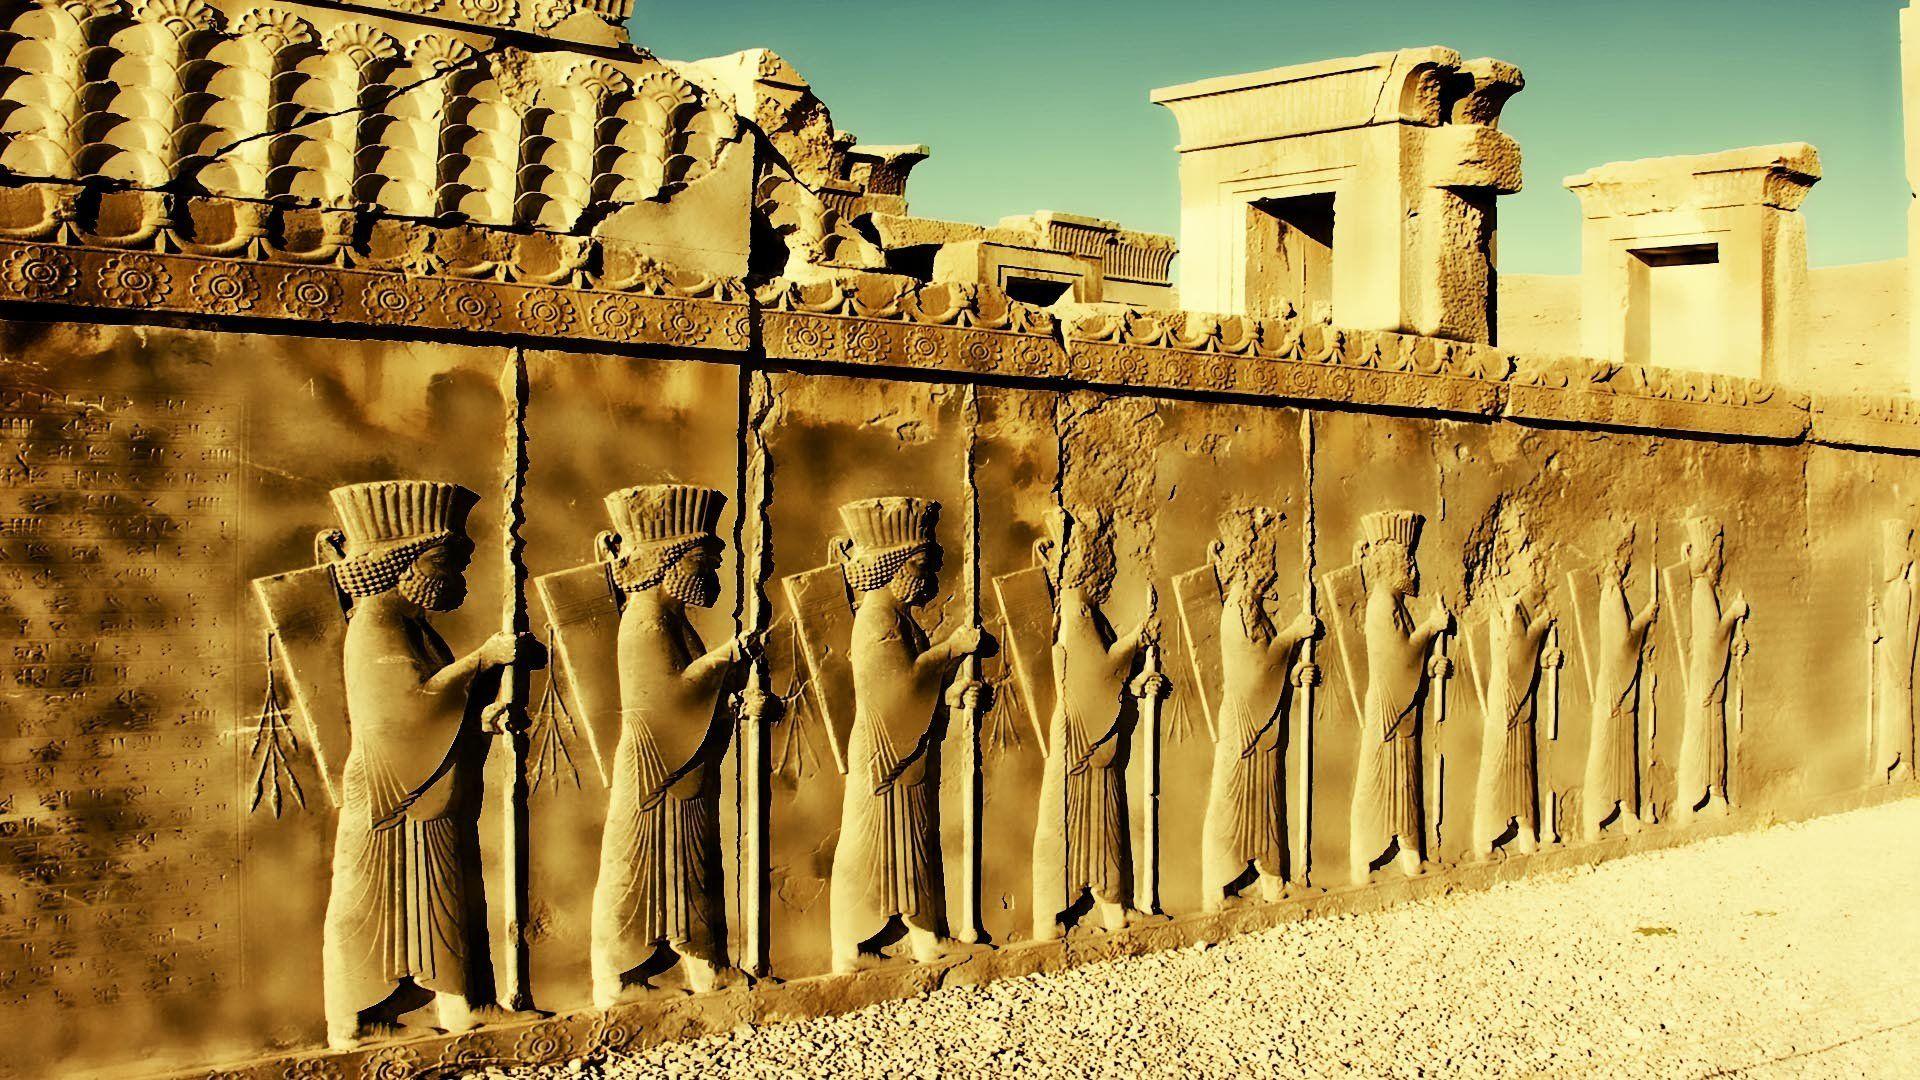 3900 Persepolis Stock Photos Pictures  RoyaltyFree Images  iStock   Persepolis iran Persepolis book Persepolis sculpture